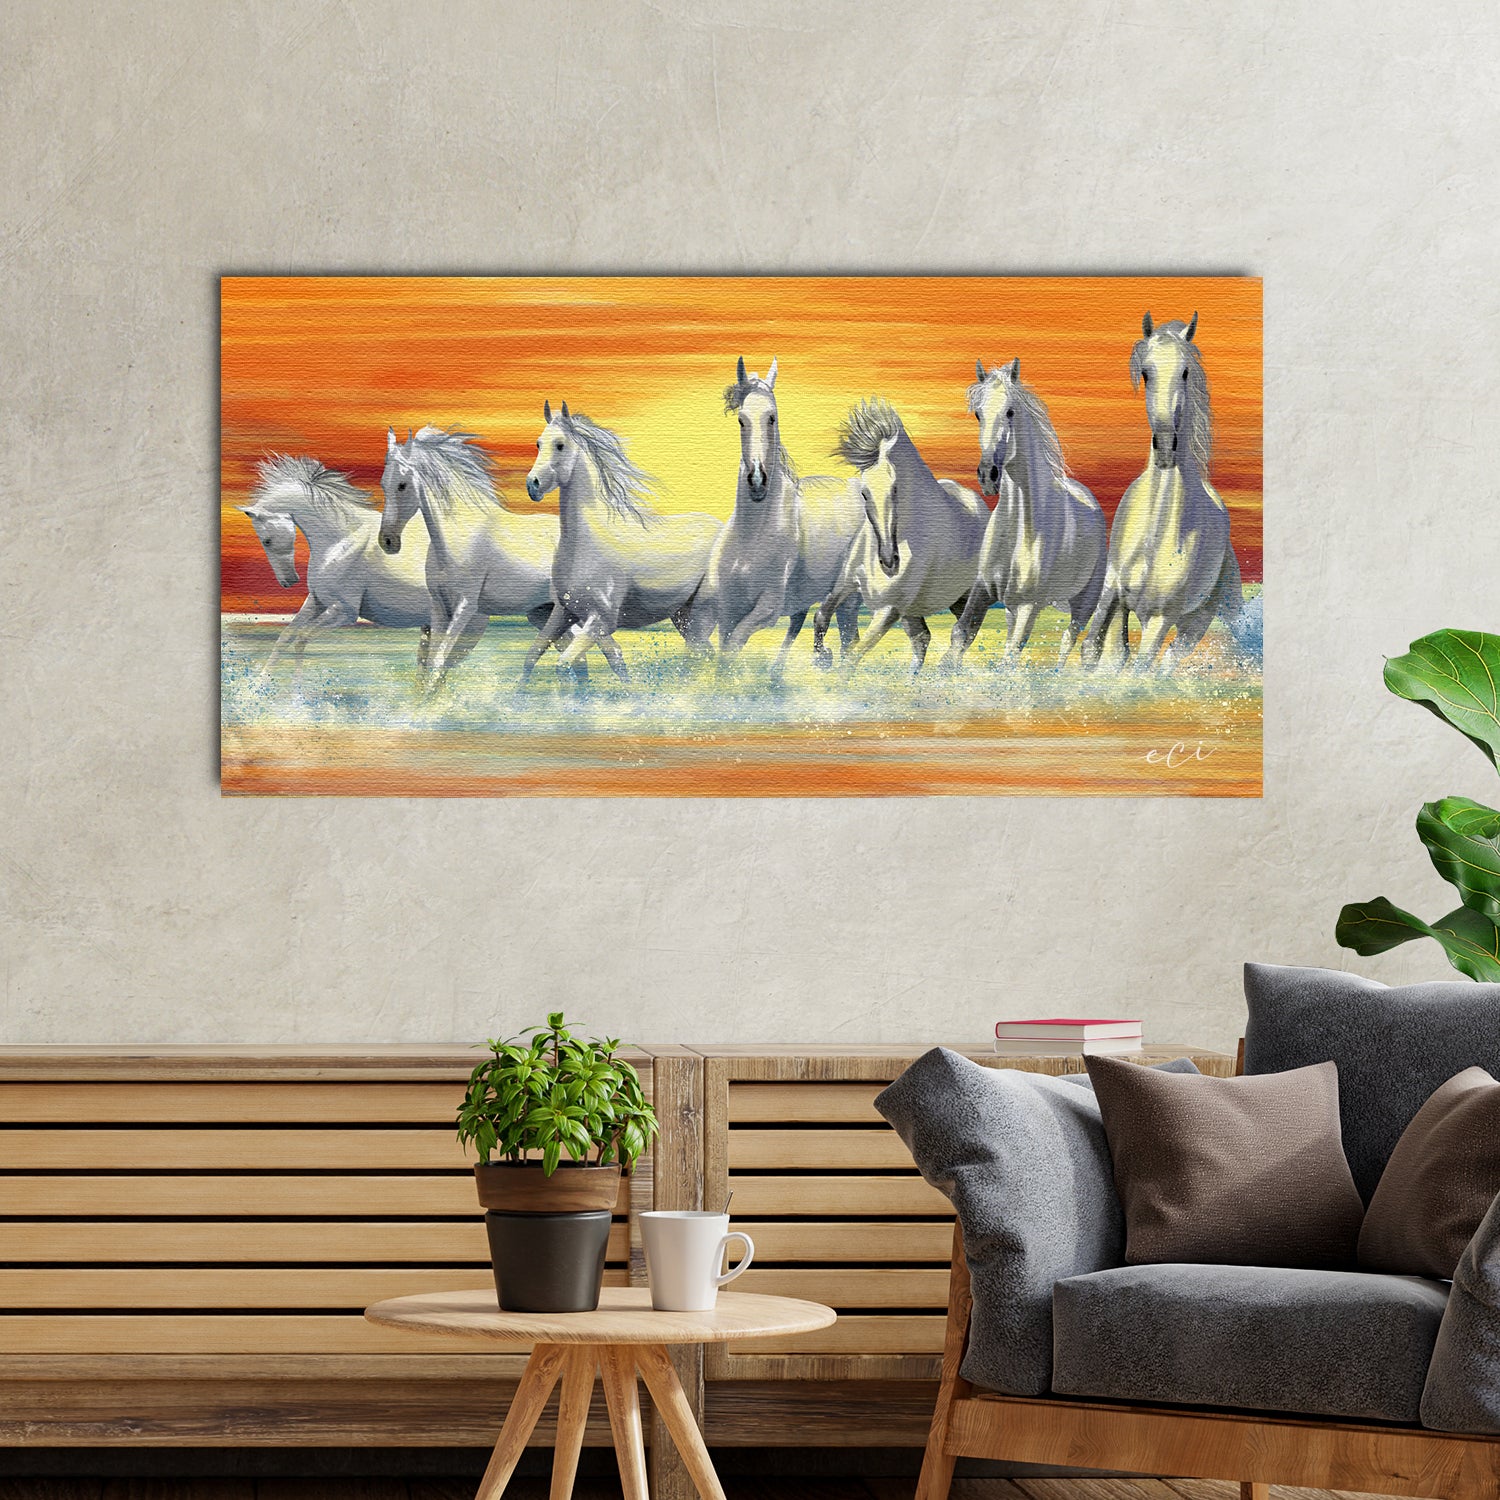 7 White Running Horses Painting Digital Printed Canvas Animal Wall Art 1